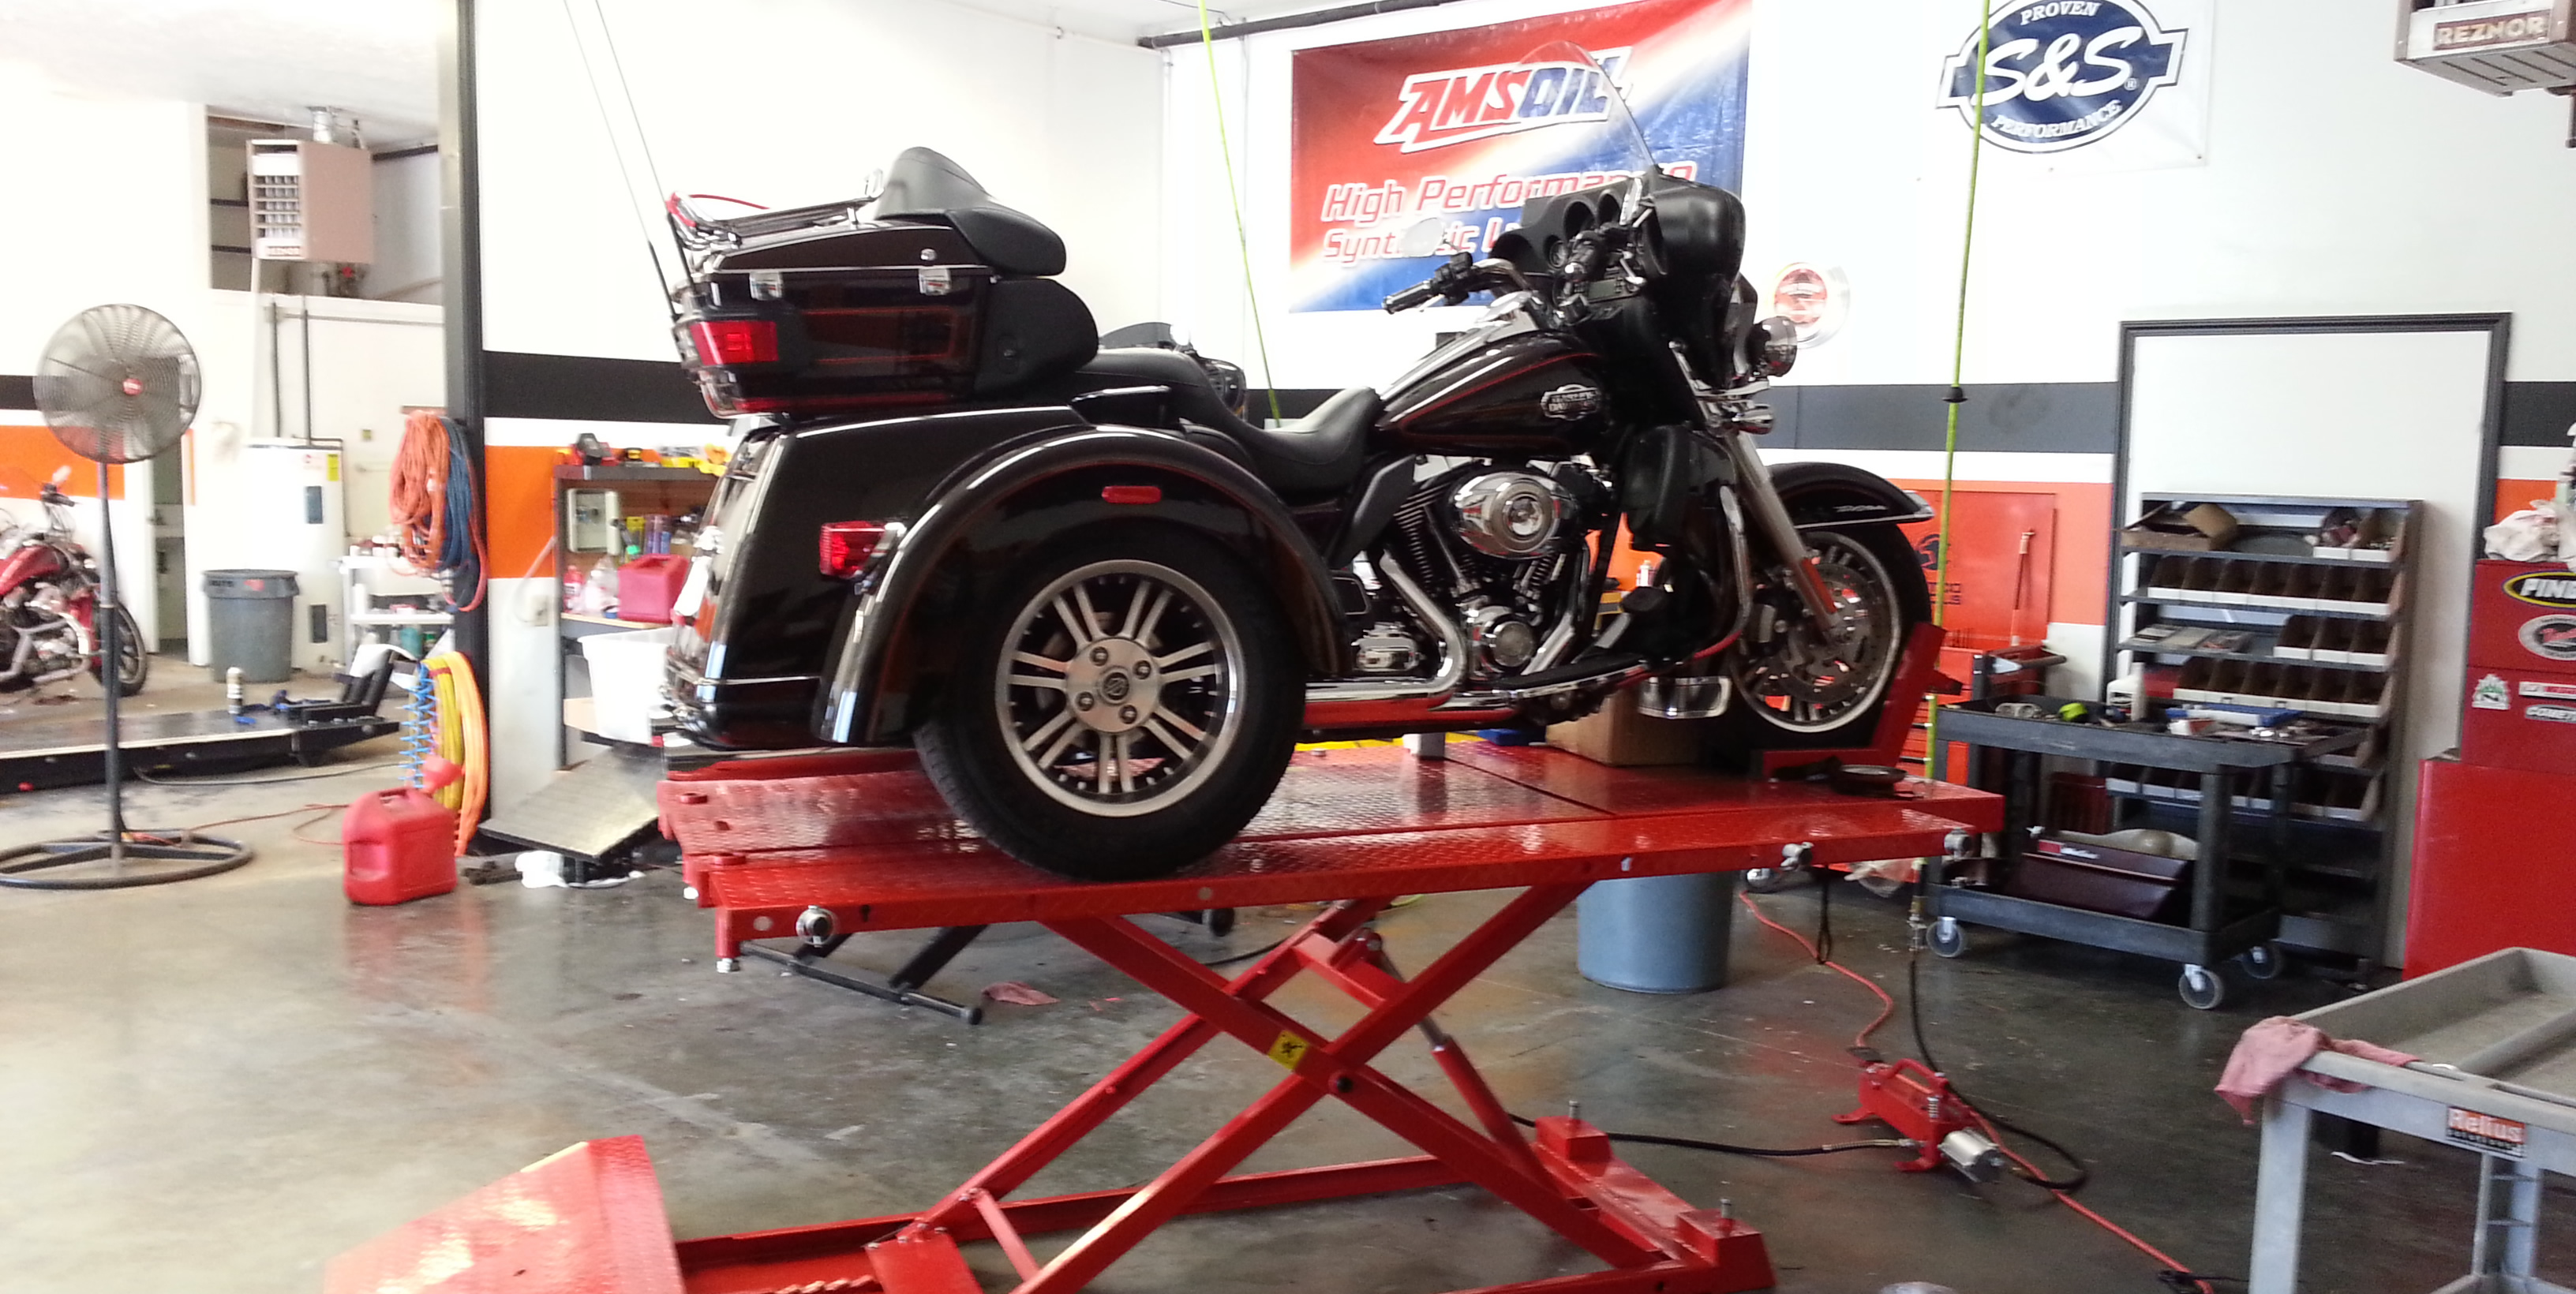 Harley Davidson Trike on the Lift